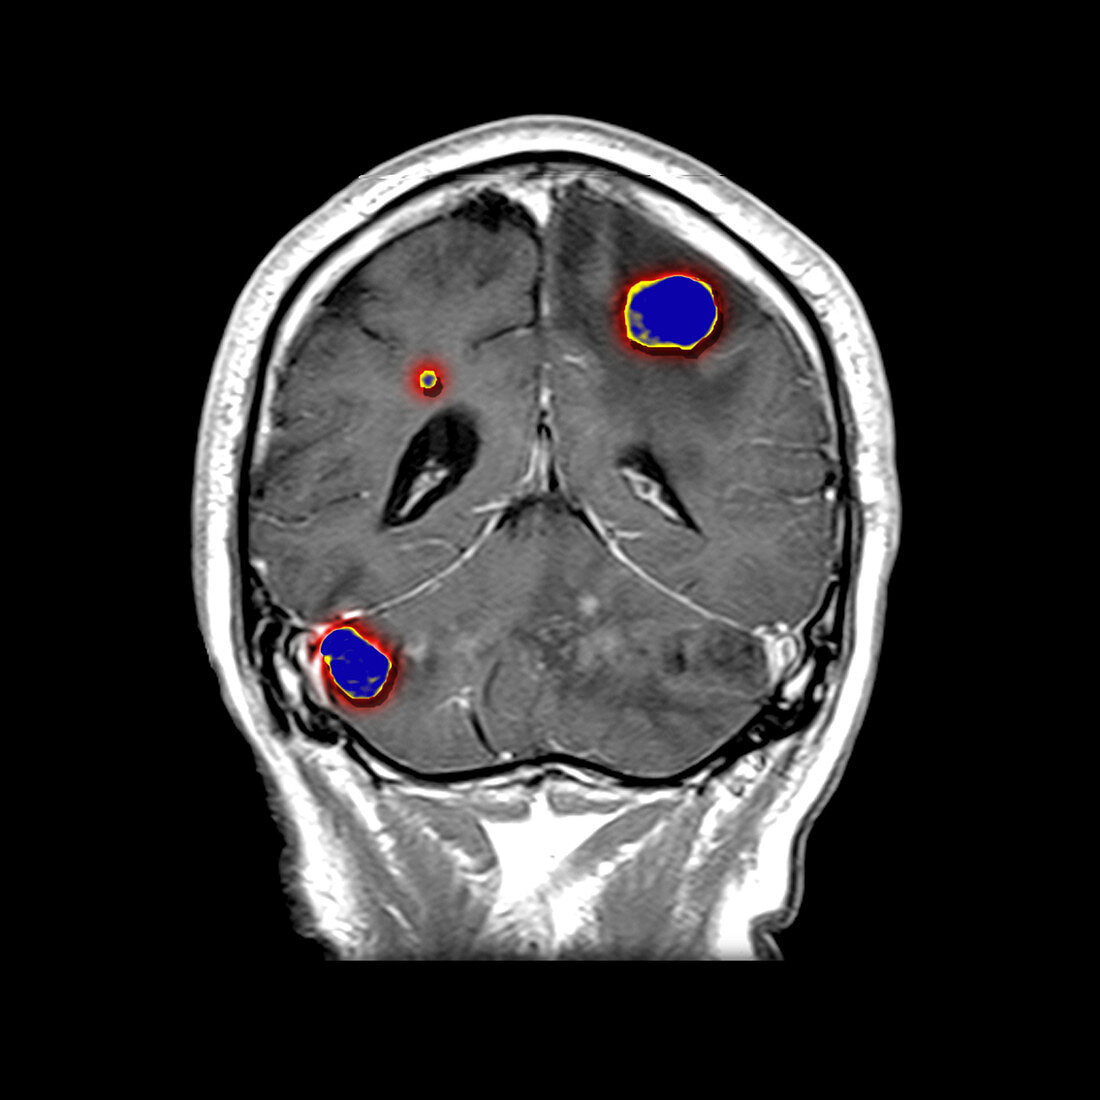 Brain tumors